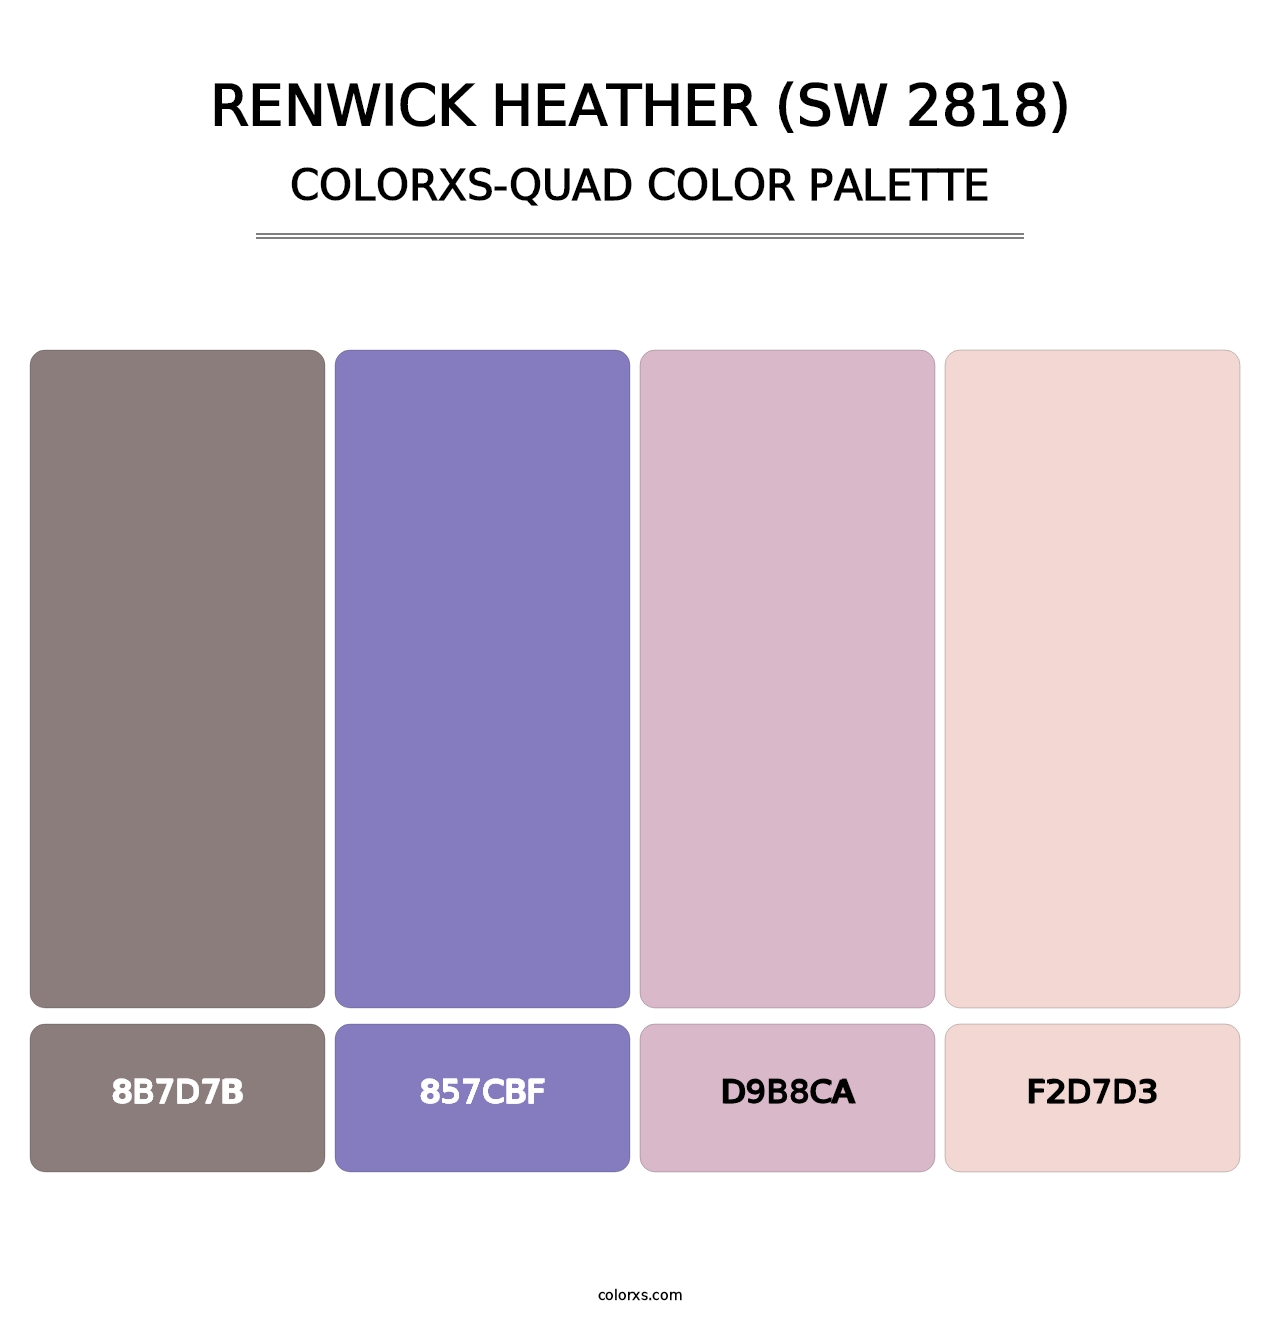 Renwick Heather (SW 2818) - Colorxs Quad Palette